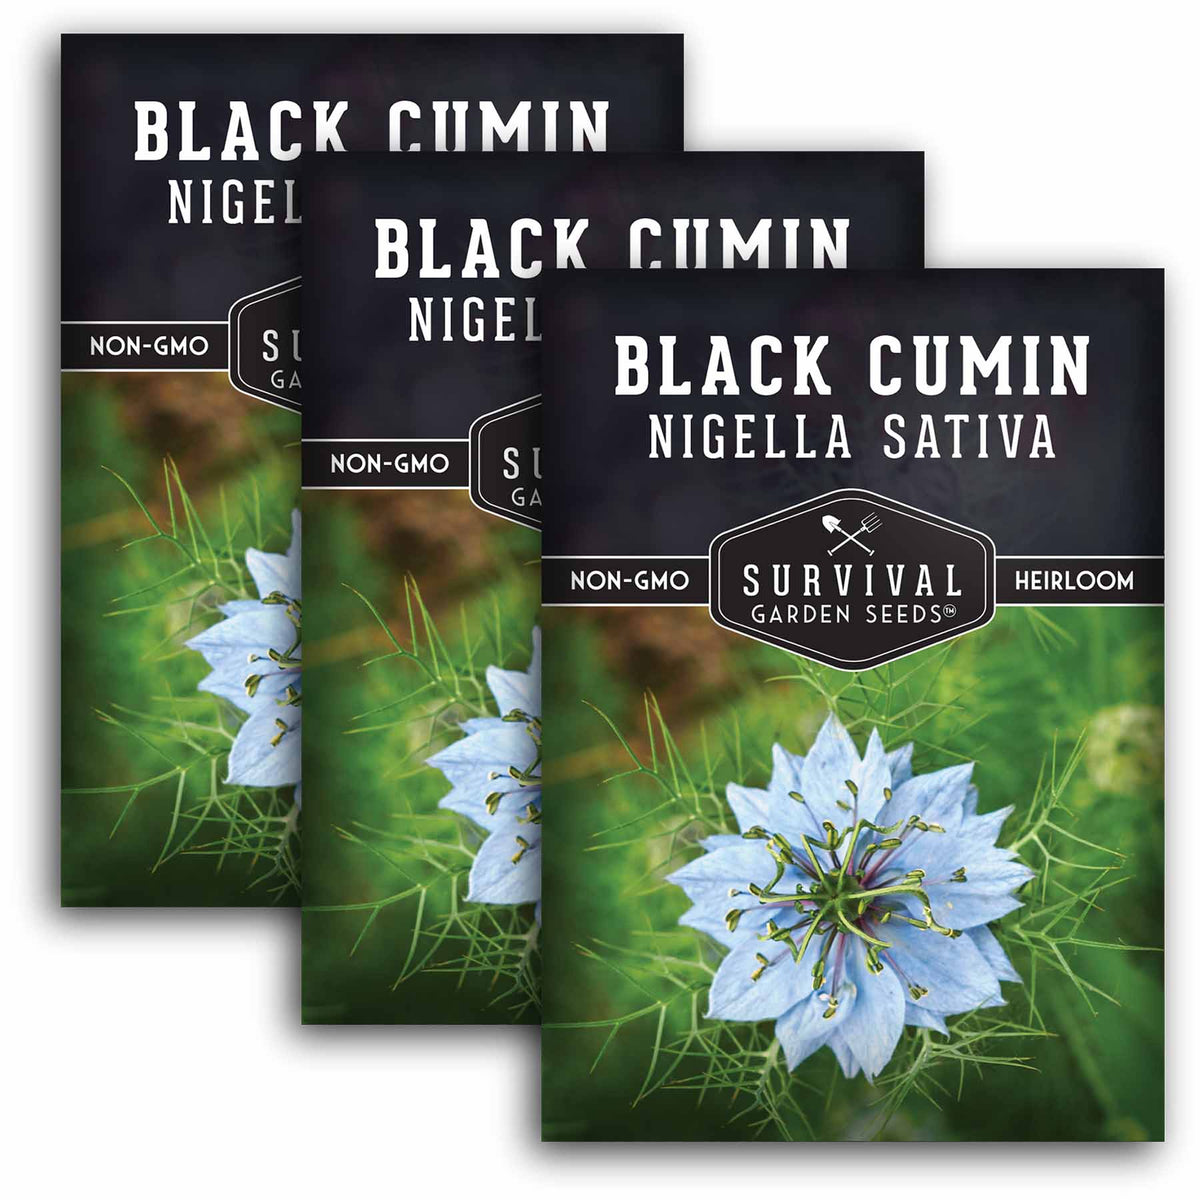 3 packets of Black Cumin seeds